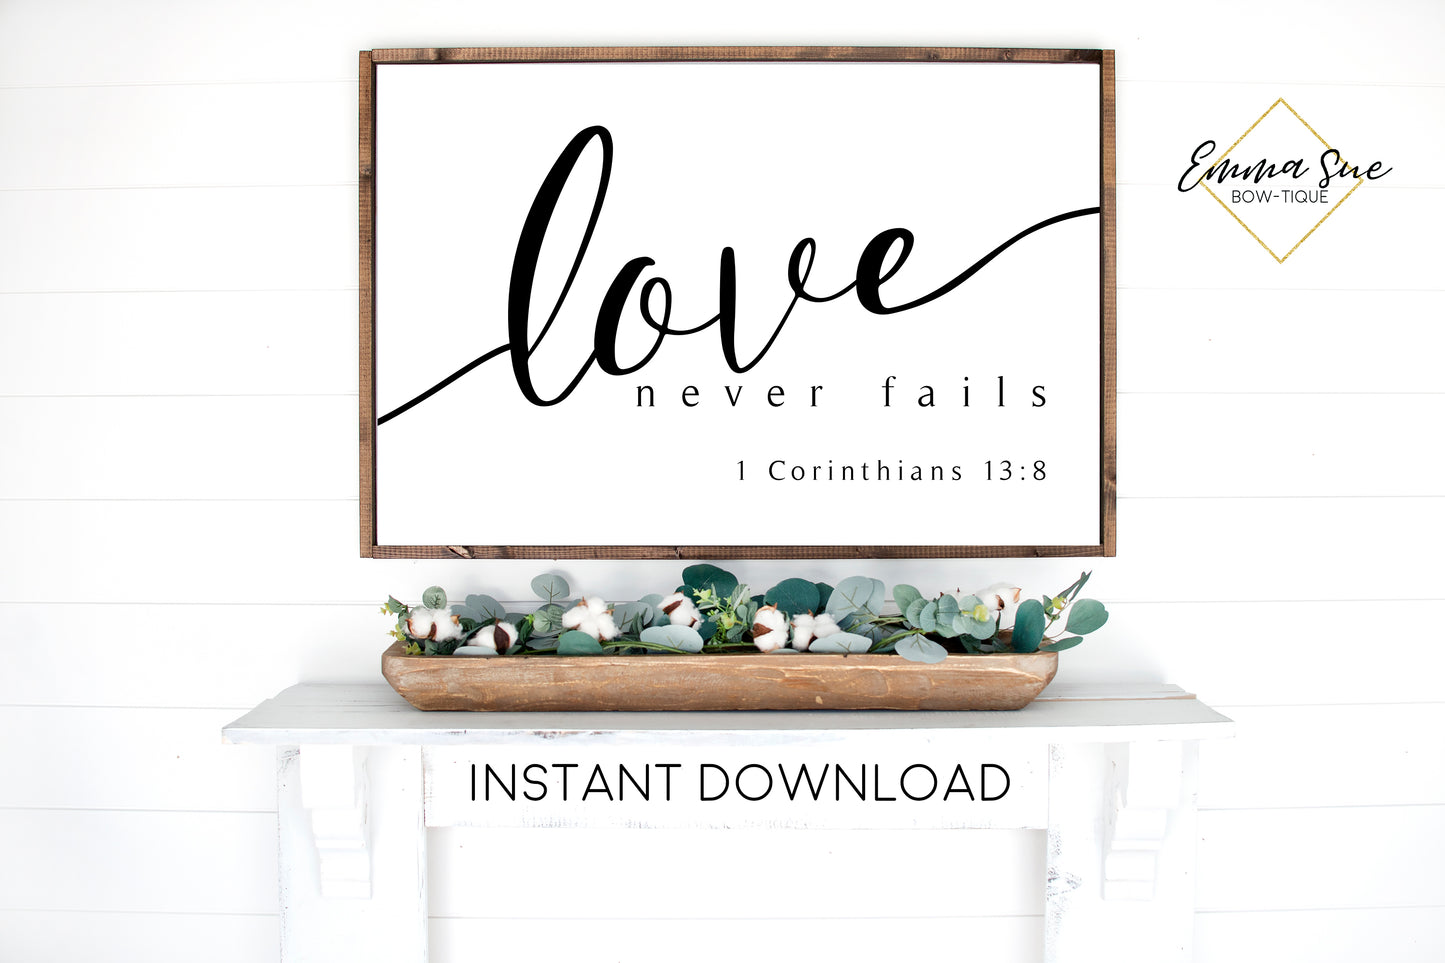 Love never fails - 1 Corinthians 13:8 Bible Verse Printable Sign Wall Art - Instant Download